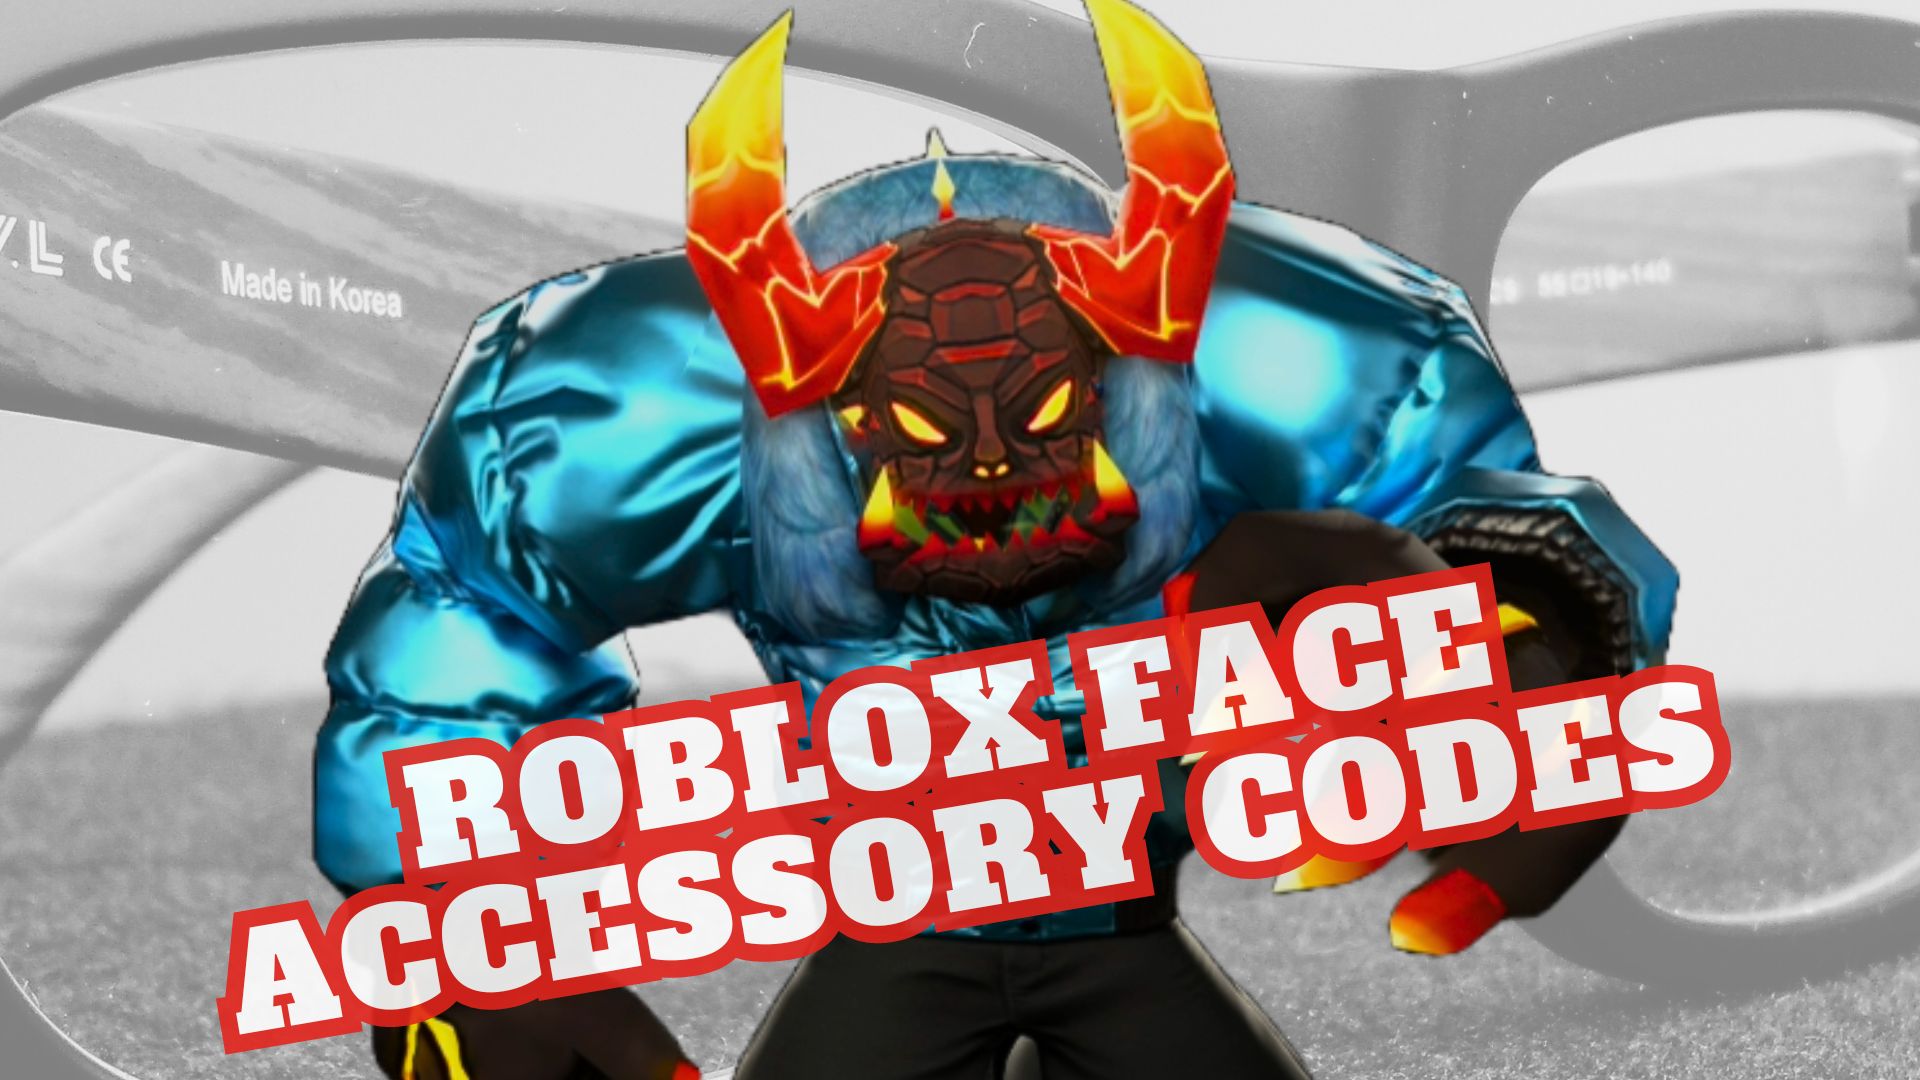 Roblox face accessories